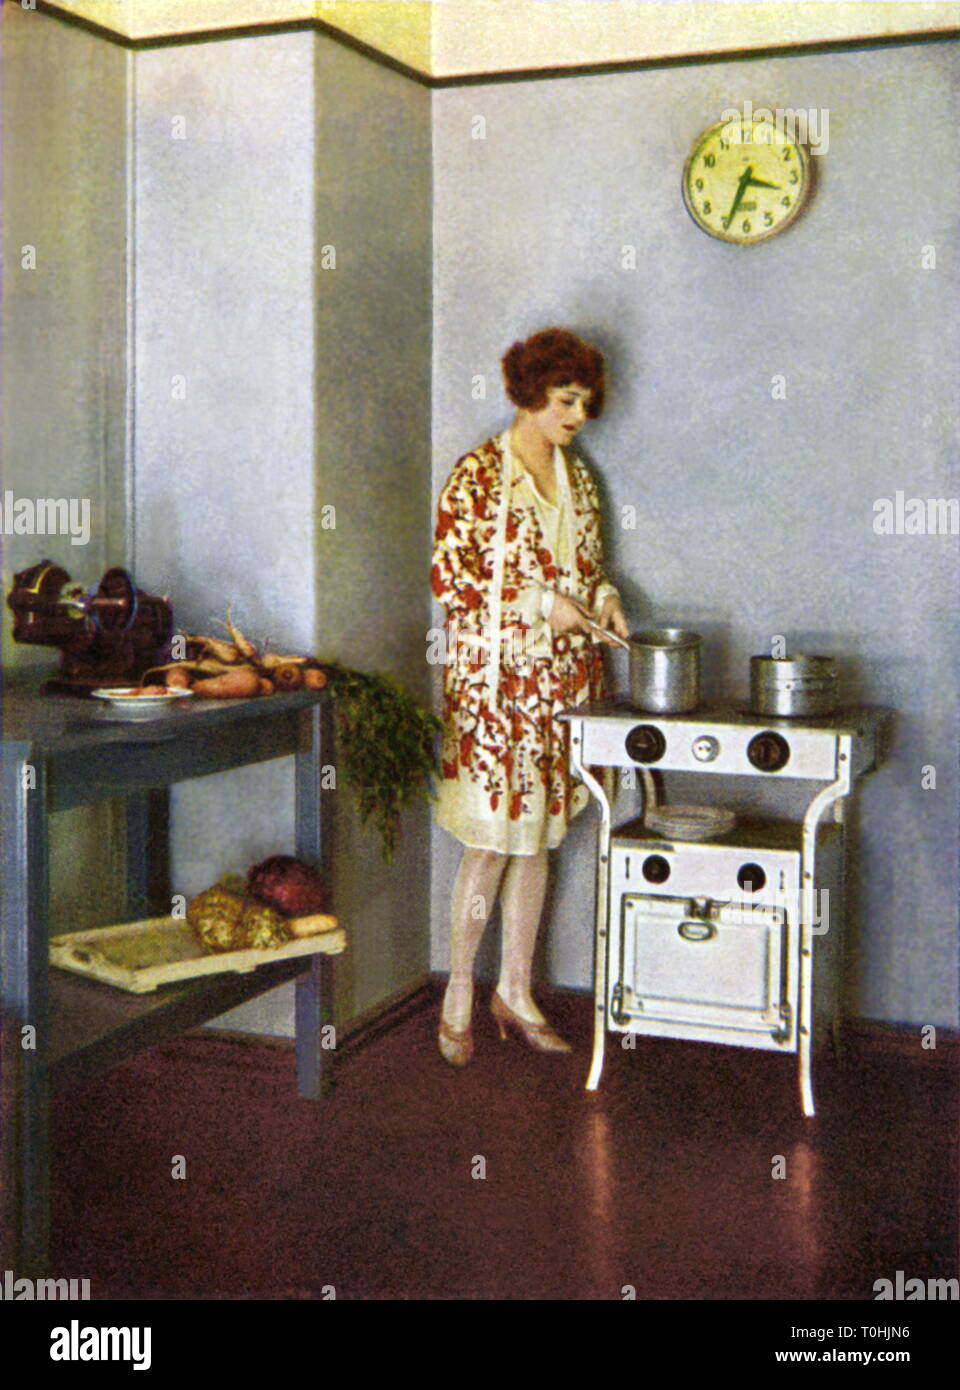 Domestico, cucina, didascalia: "Hanni Weisse am AEG Kochherd", cartolina pubblicitaria, Germania, circa 1929, Additional-Rights-Clearance-Info-Not-Available Foto Stock